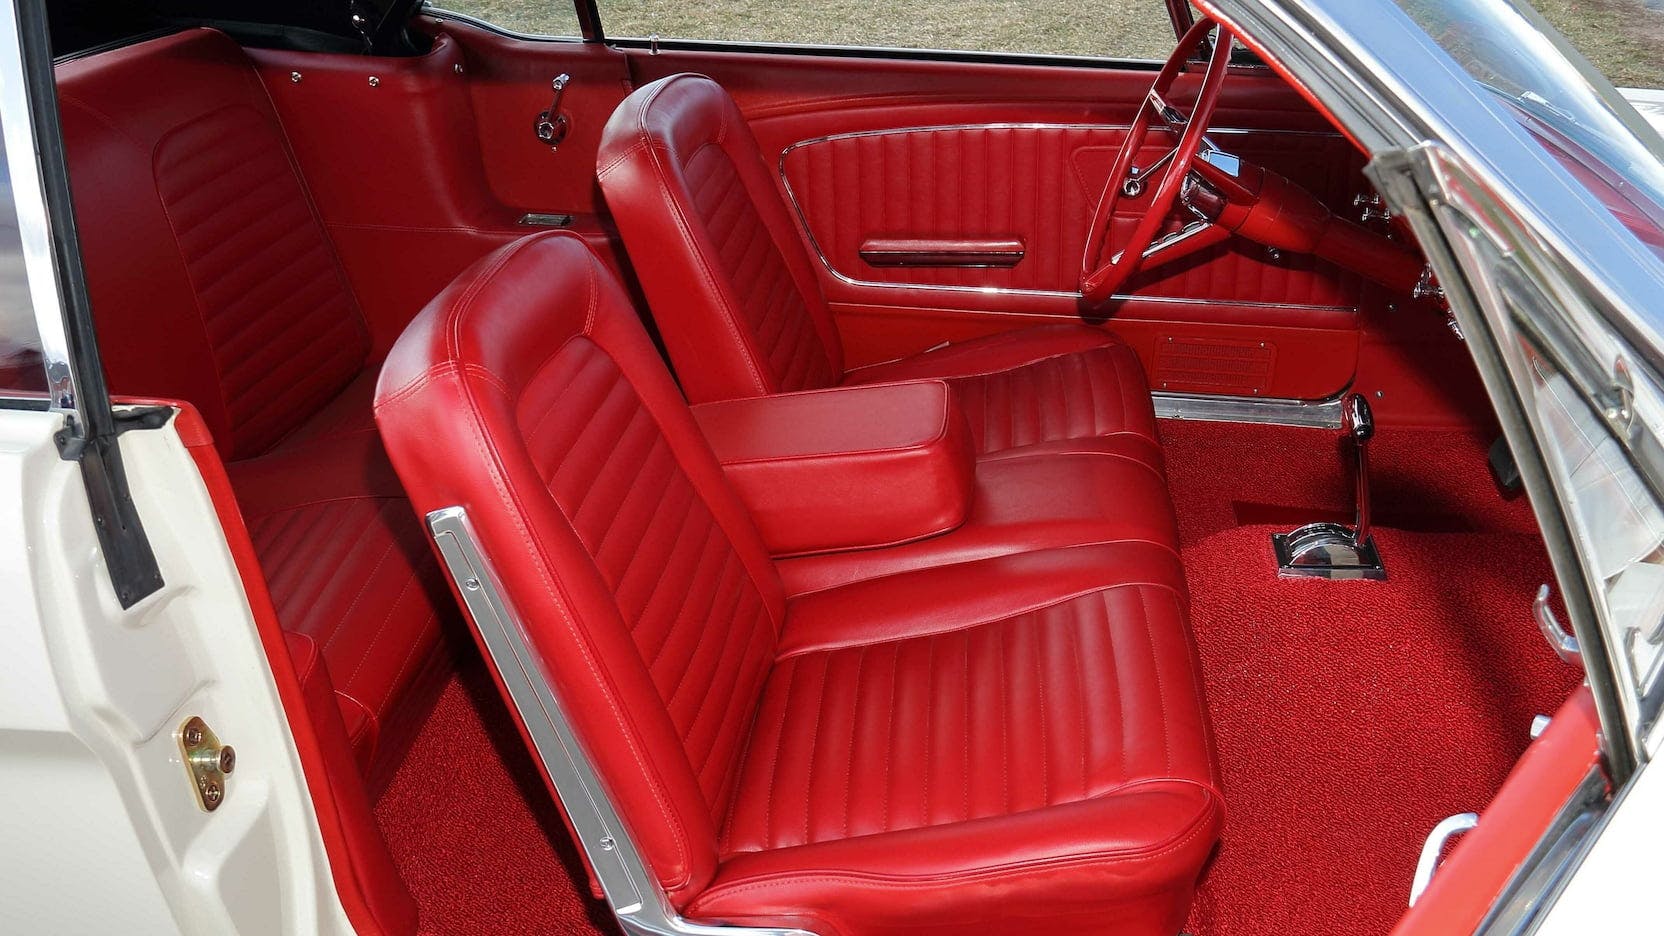 1965 Magic Skyway Mustang Convertible interior